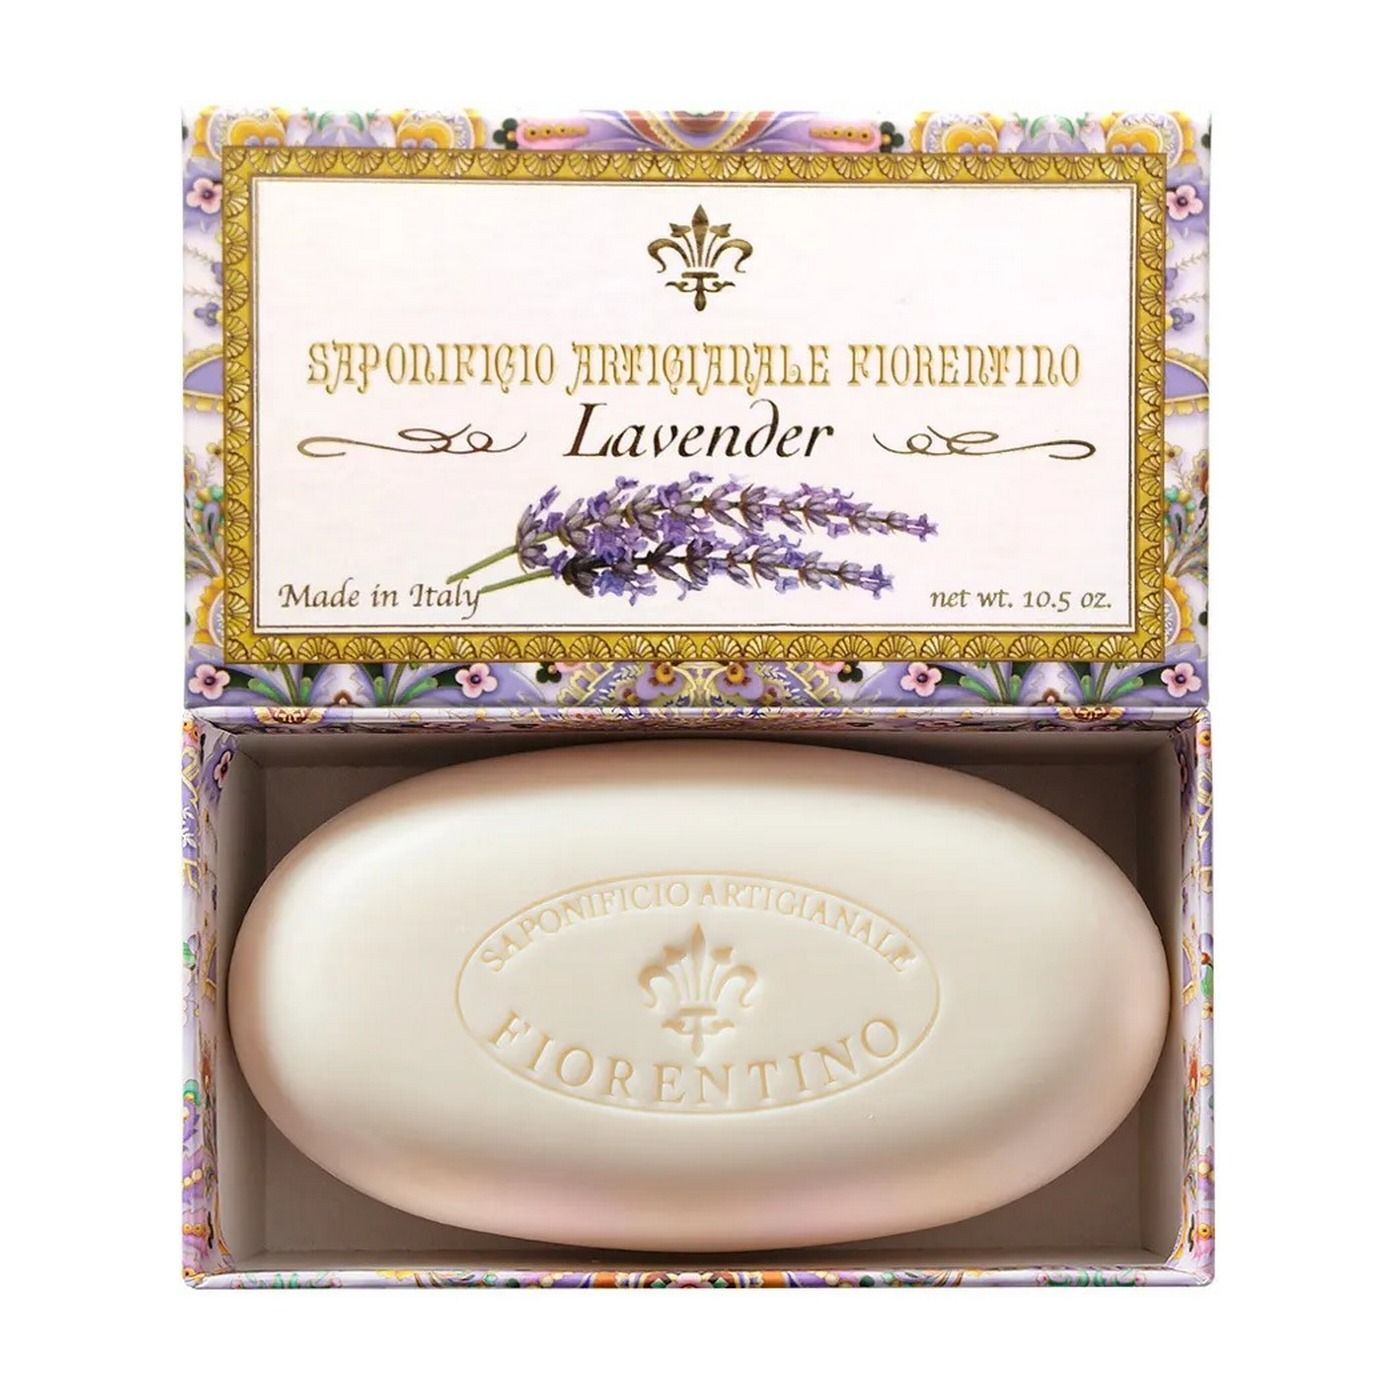 Saponificio Artigianale Fiorentino Lavender Мыло туалетное ручной работы с ароматом Лаванды 300 гр в коробке